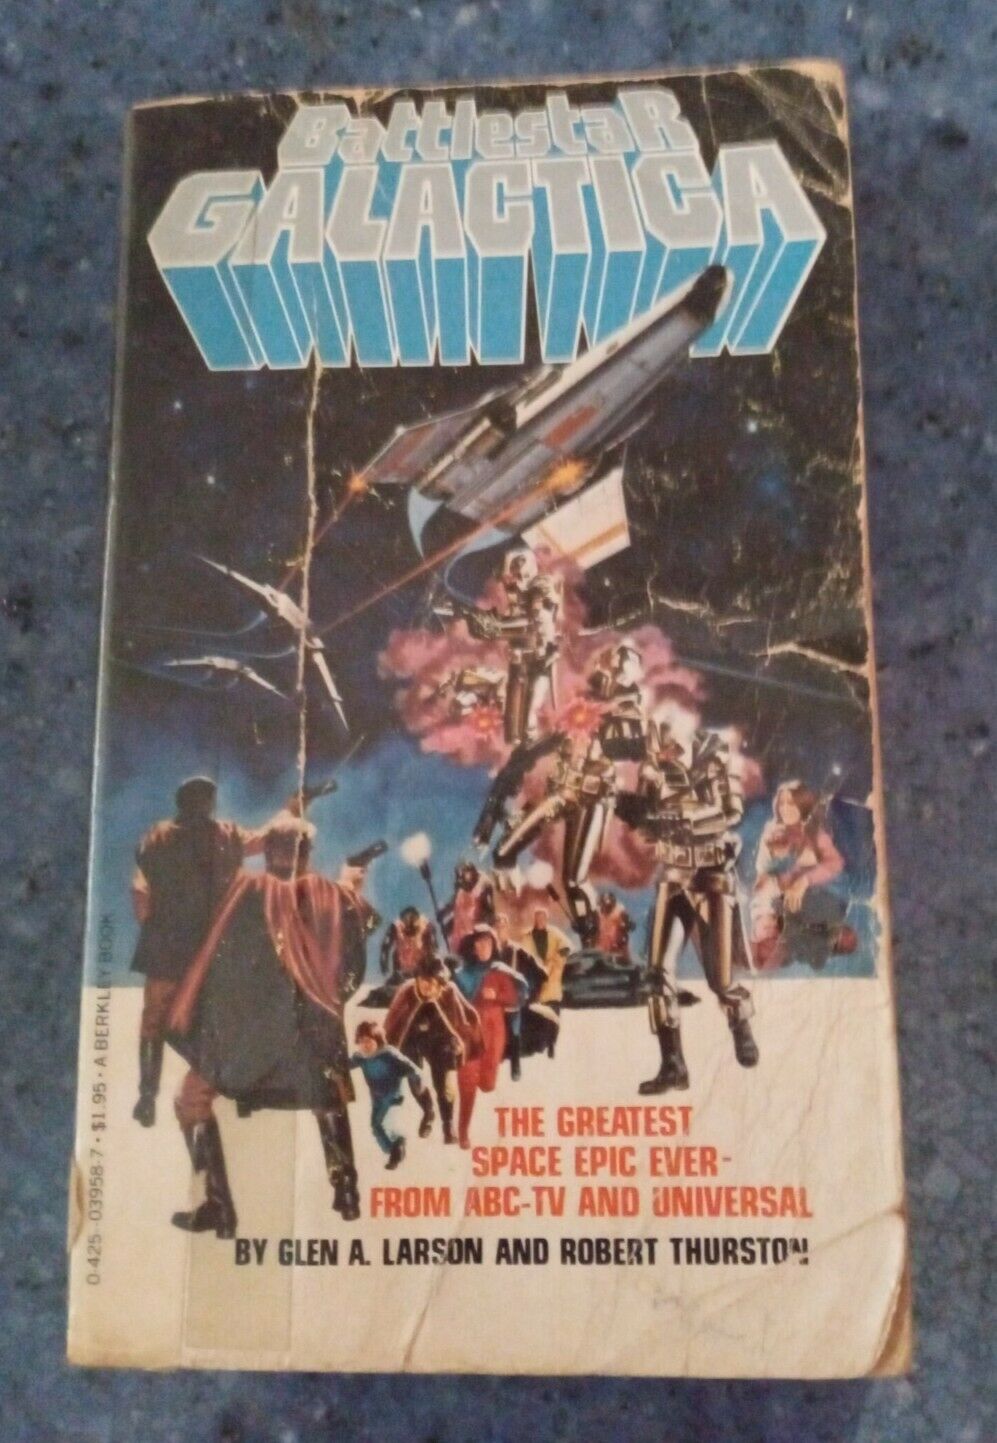 Battlestar Galactica 1978 Pbk Book Larson, Thurston, Berkley Library-used